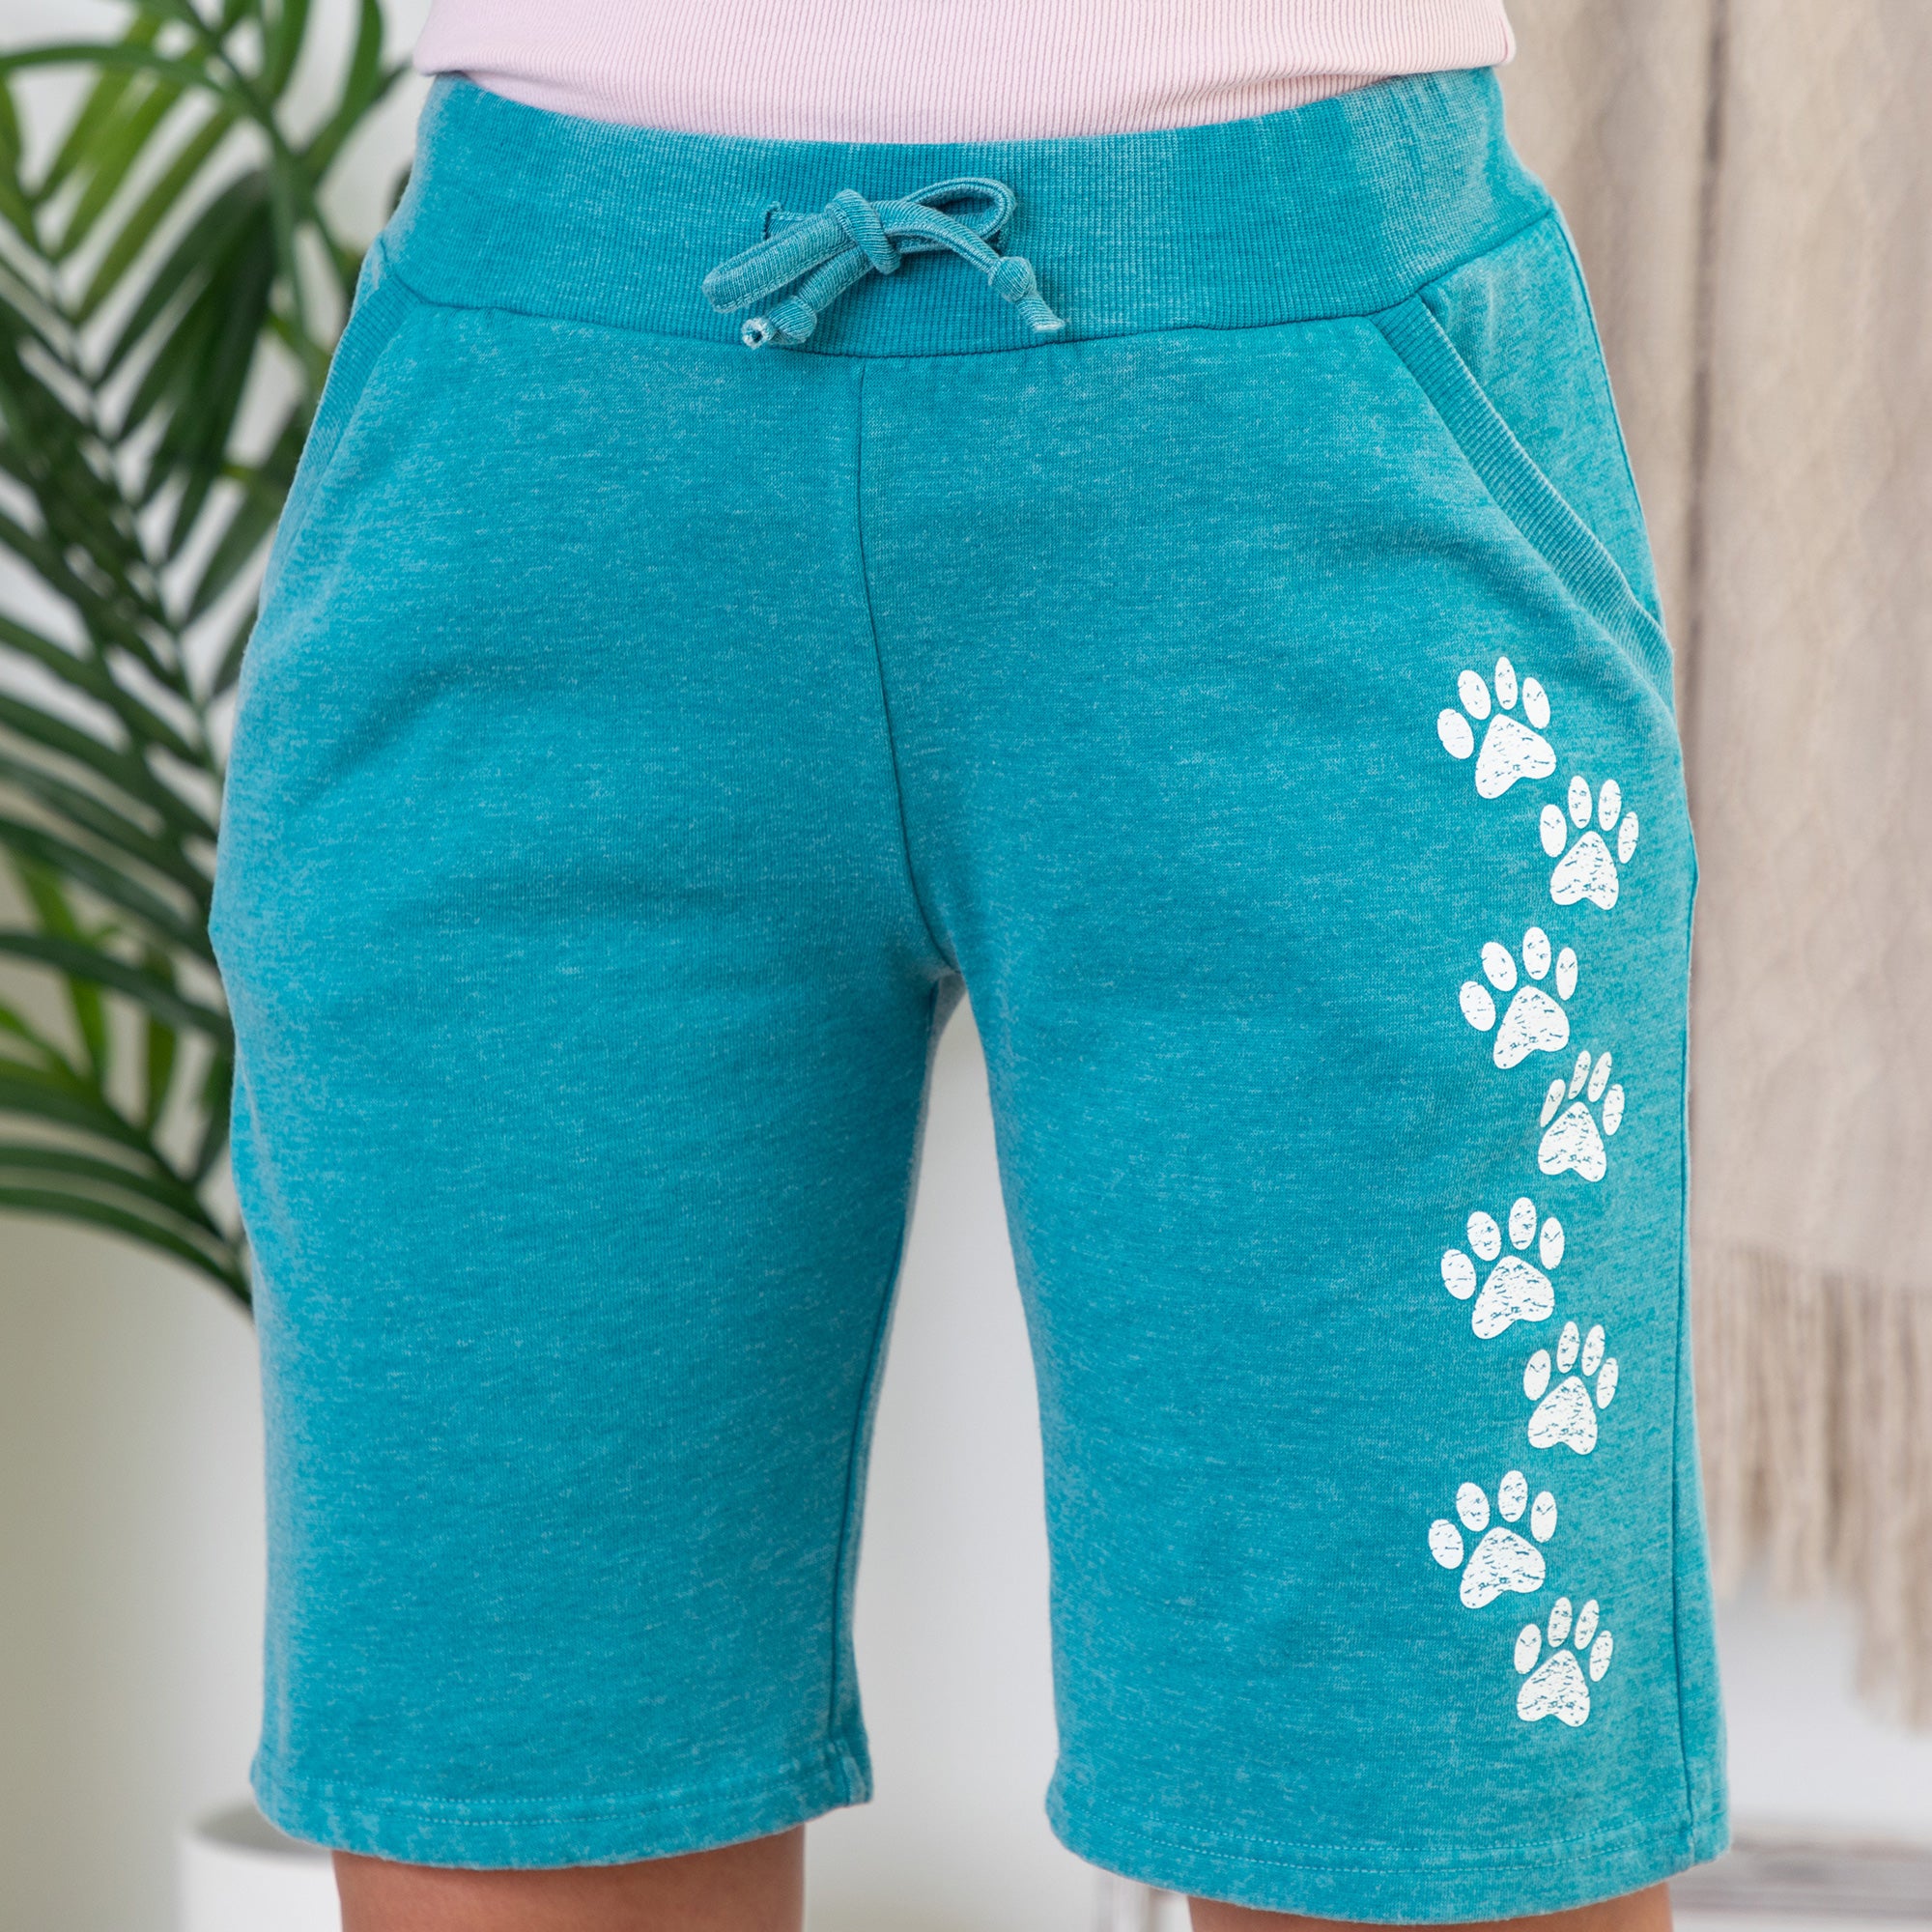 Walking Paws Burnout Board Shorts - Turquoise - 3X